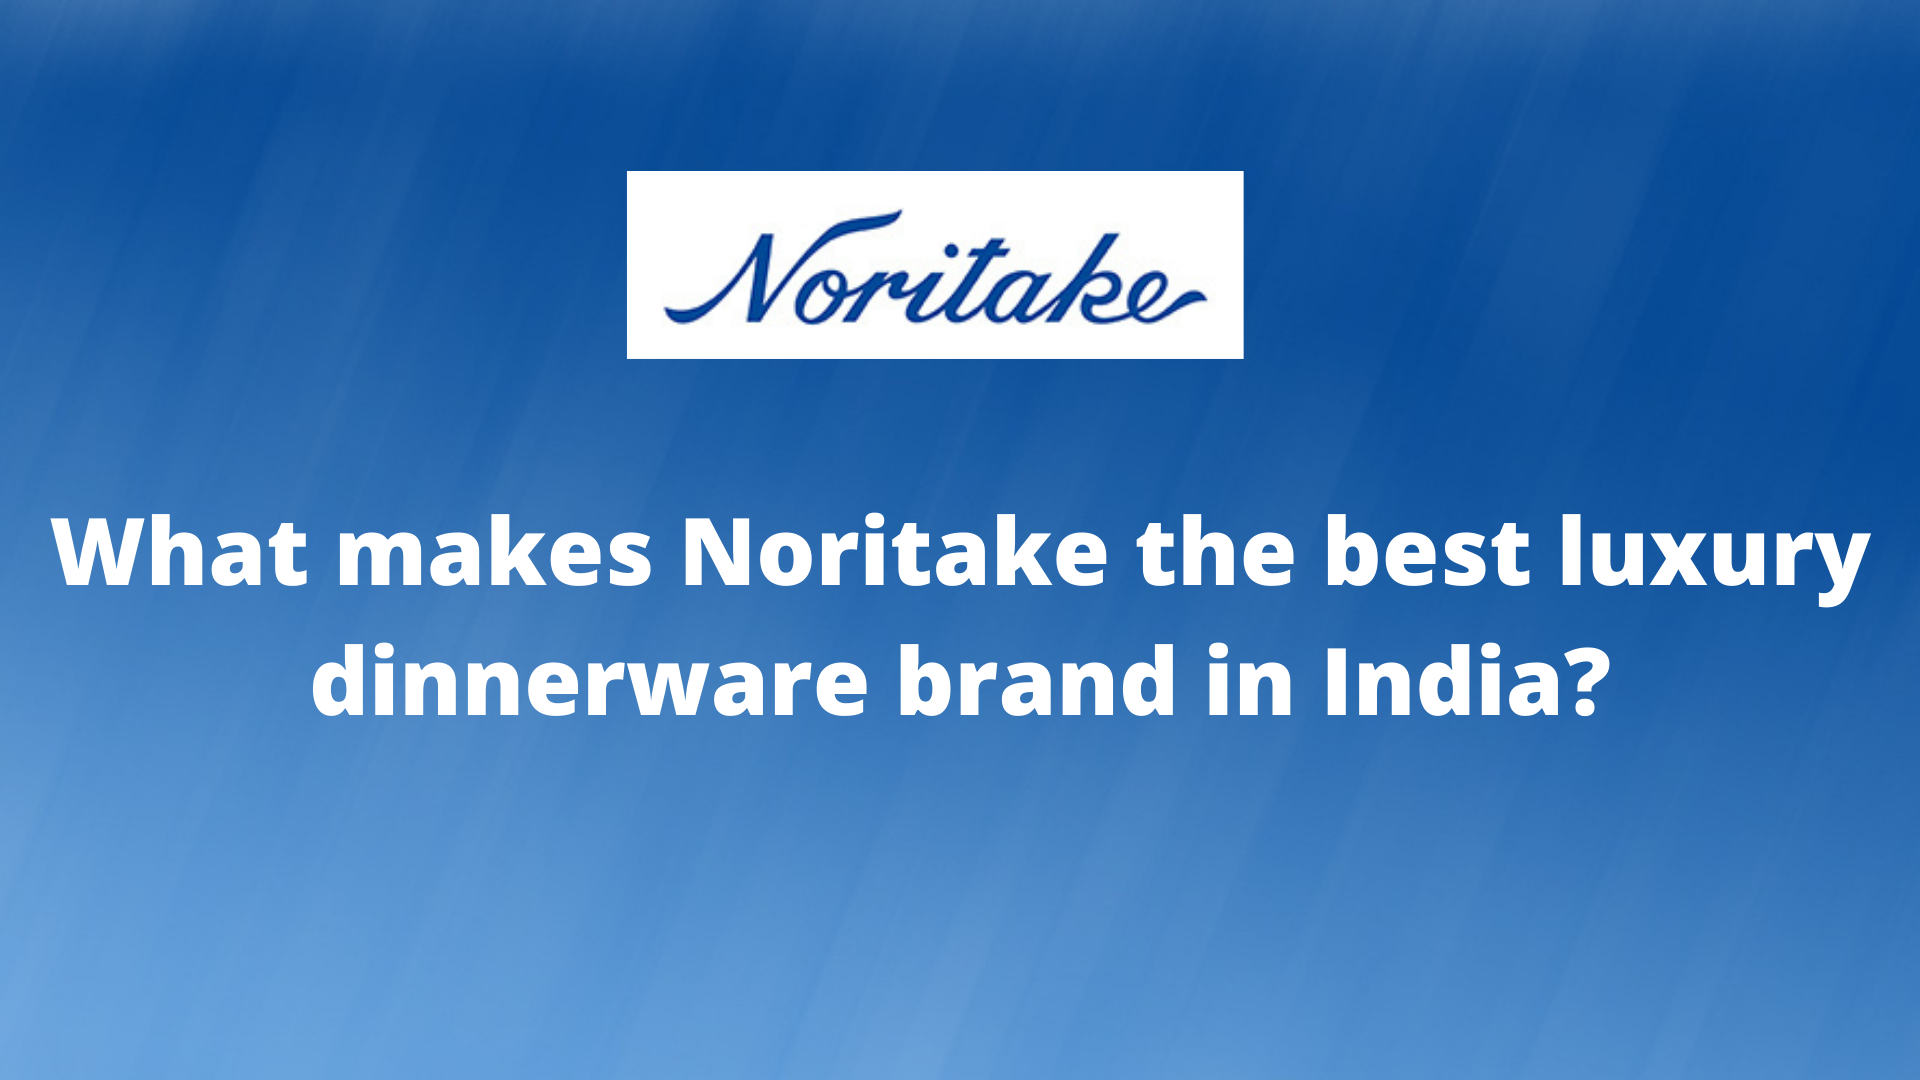 What makes Noritake the best luxury dinnerware brand in India?